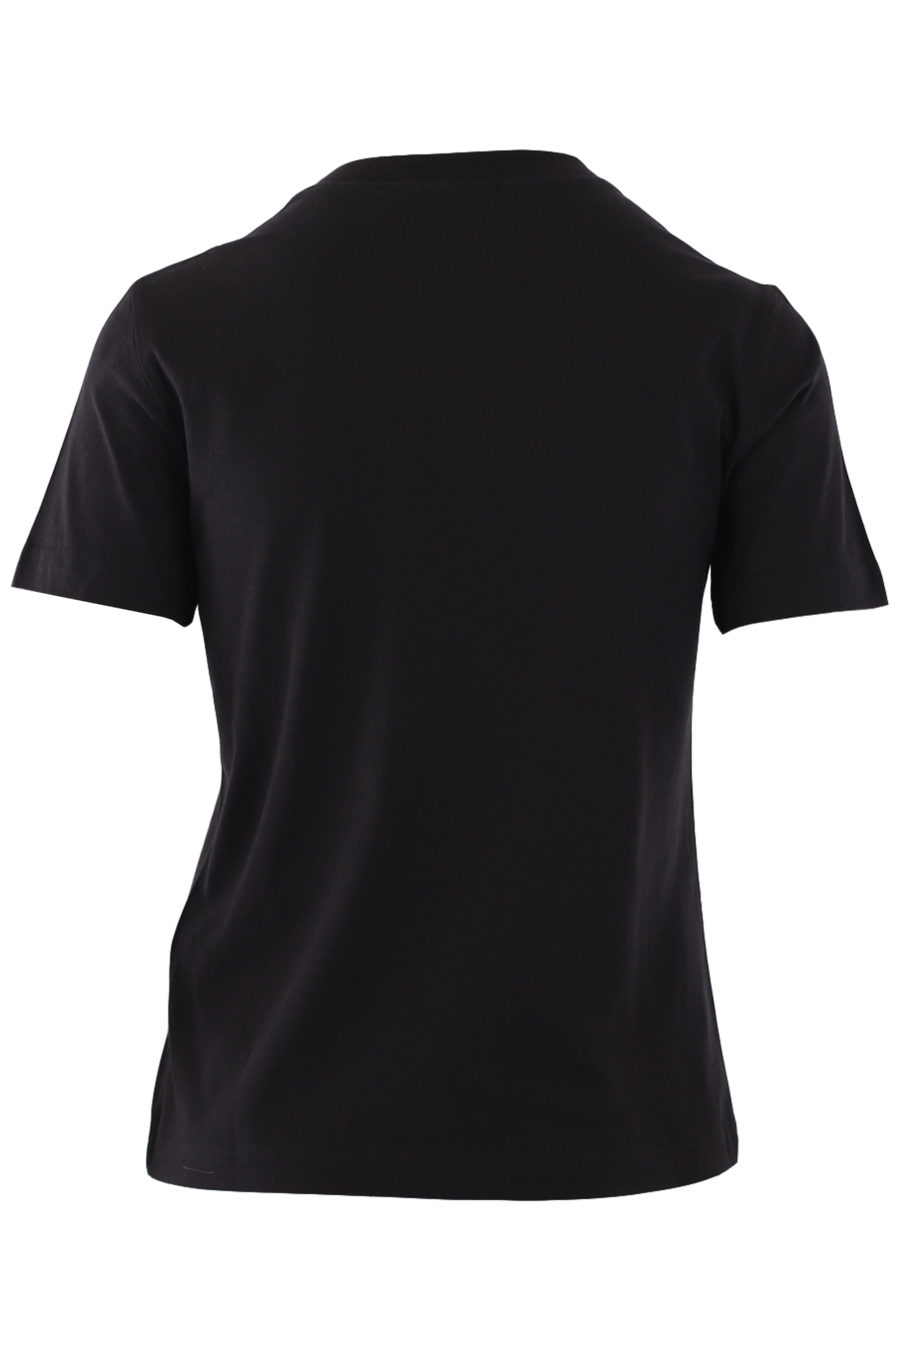 T-shirt preta com logótipo multicolorido no centro - IMG 0829